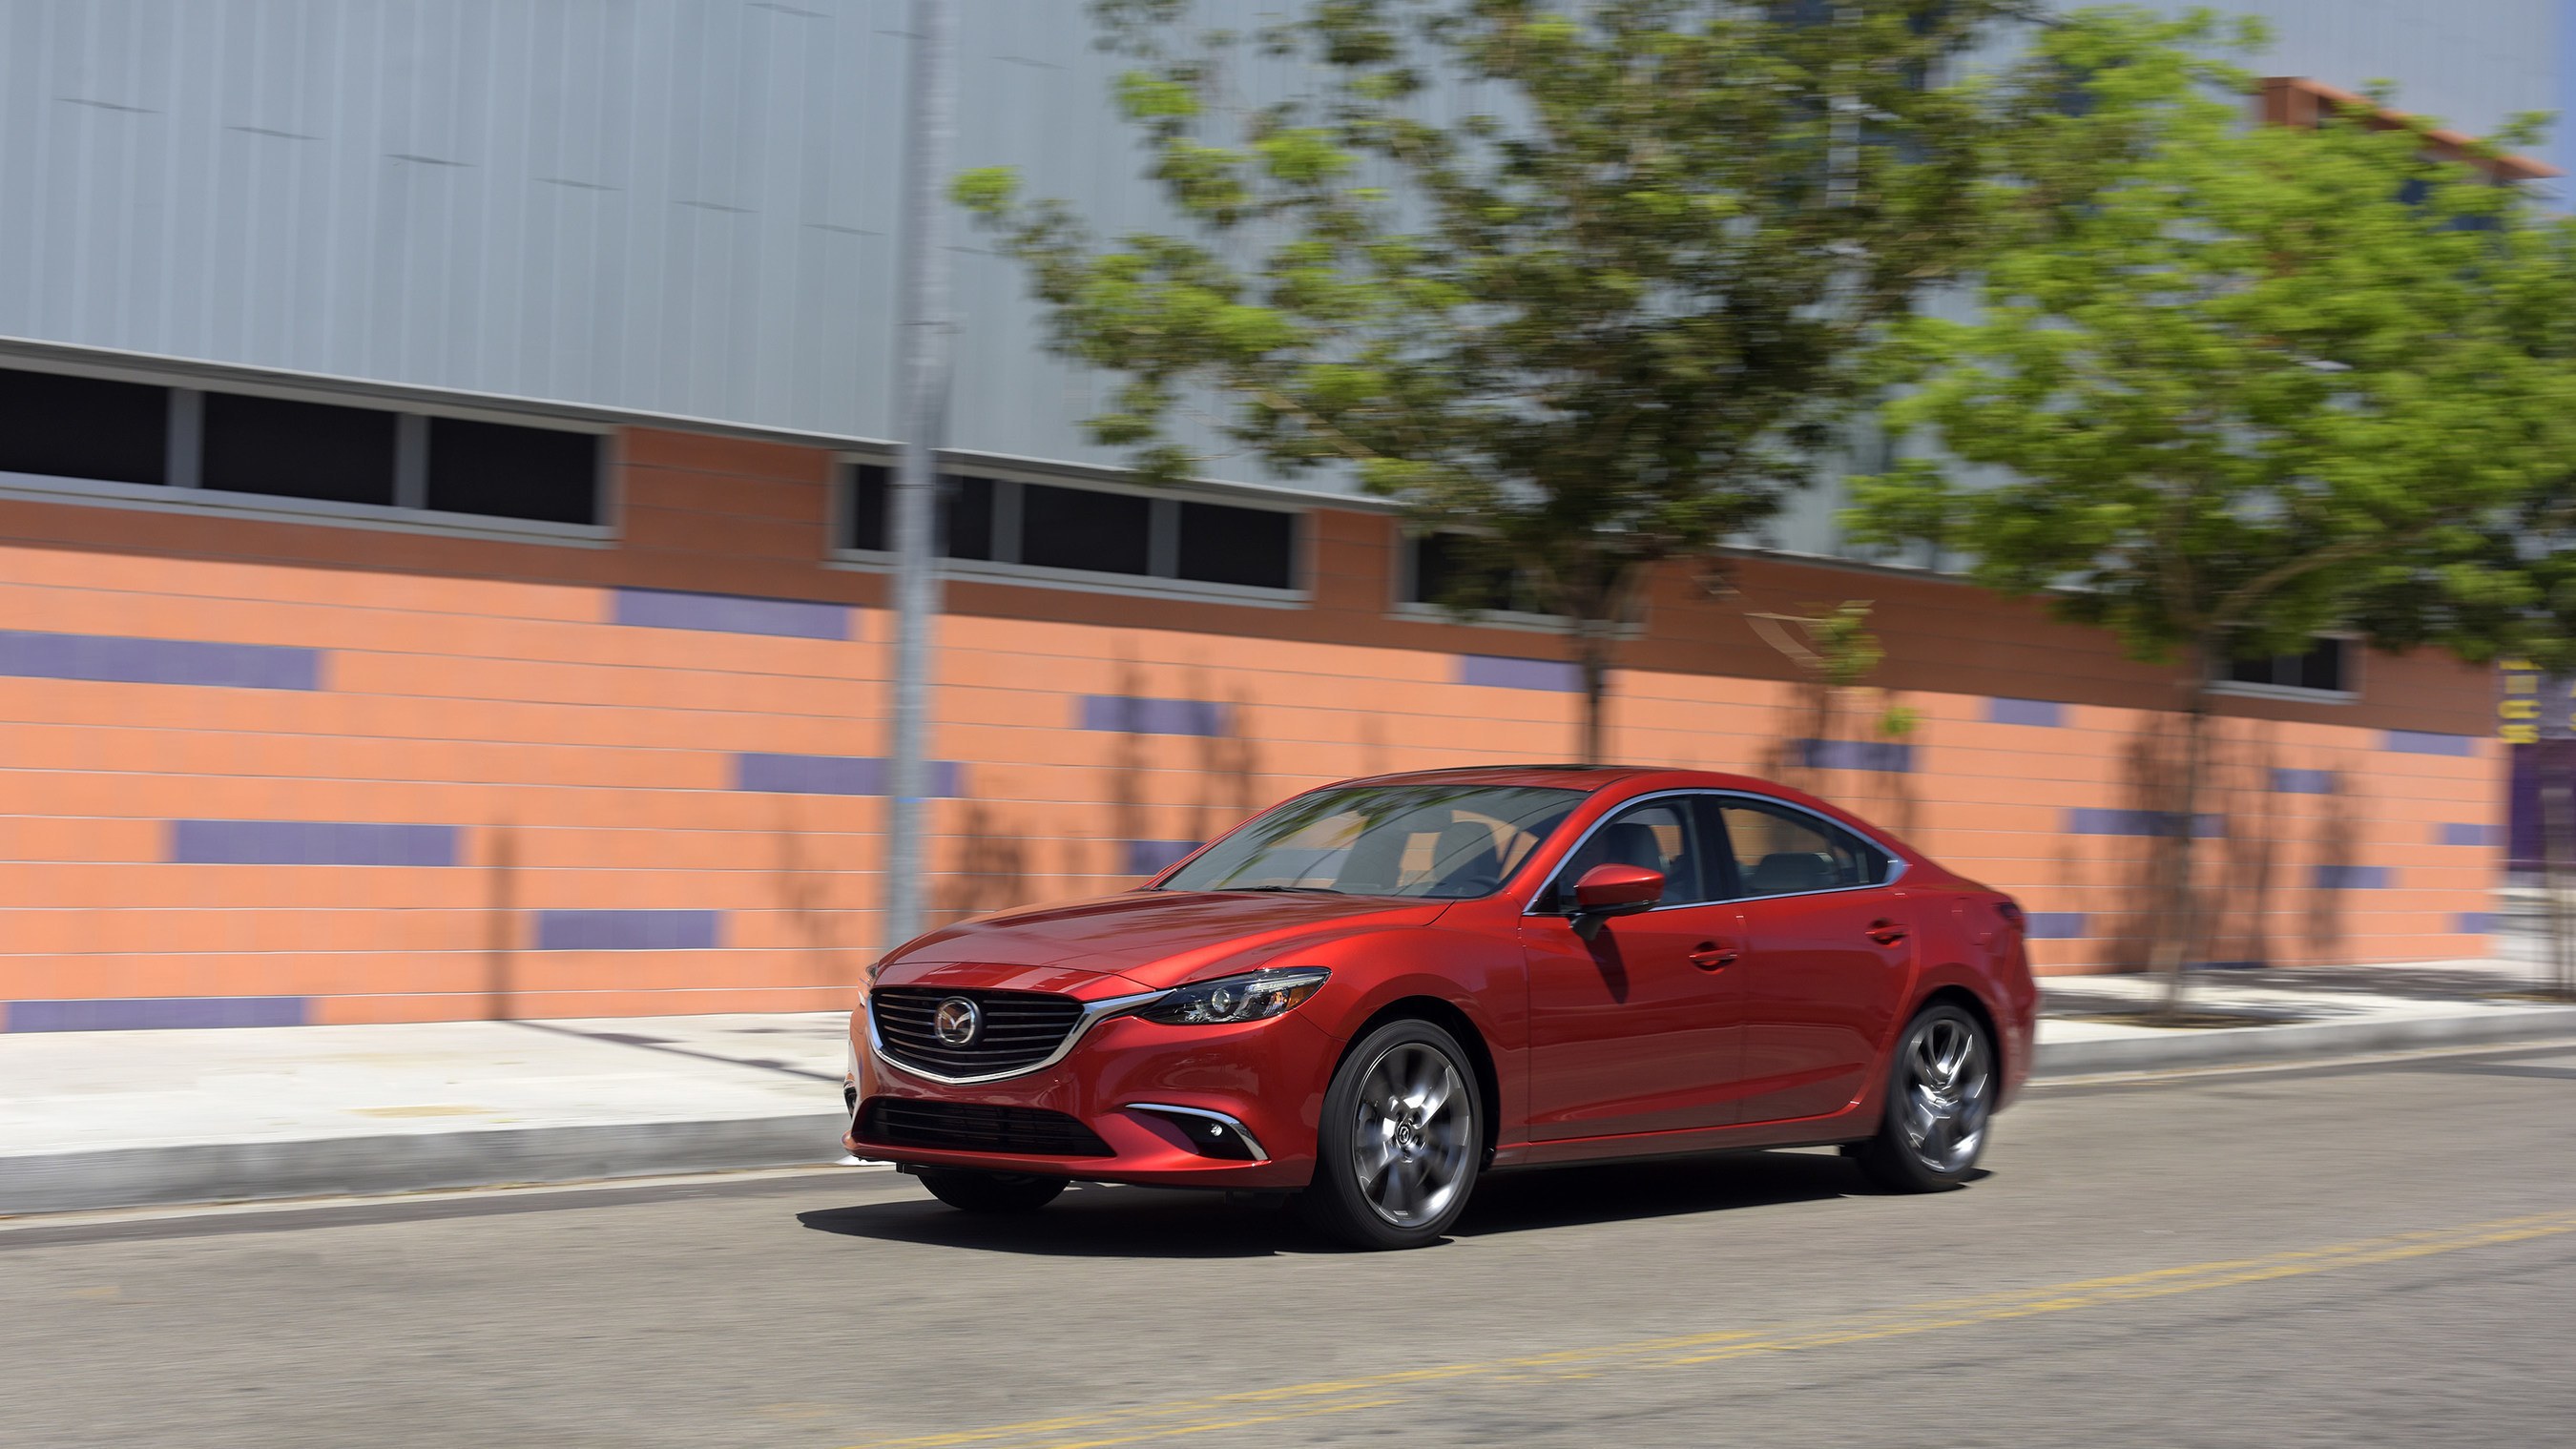 Seeking the Finer Things in Life: 2017 Mazda6 Makes Global Debut